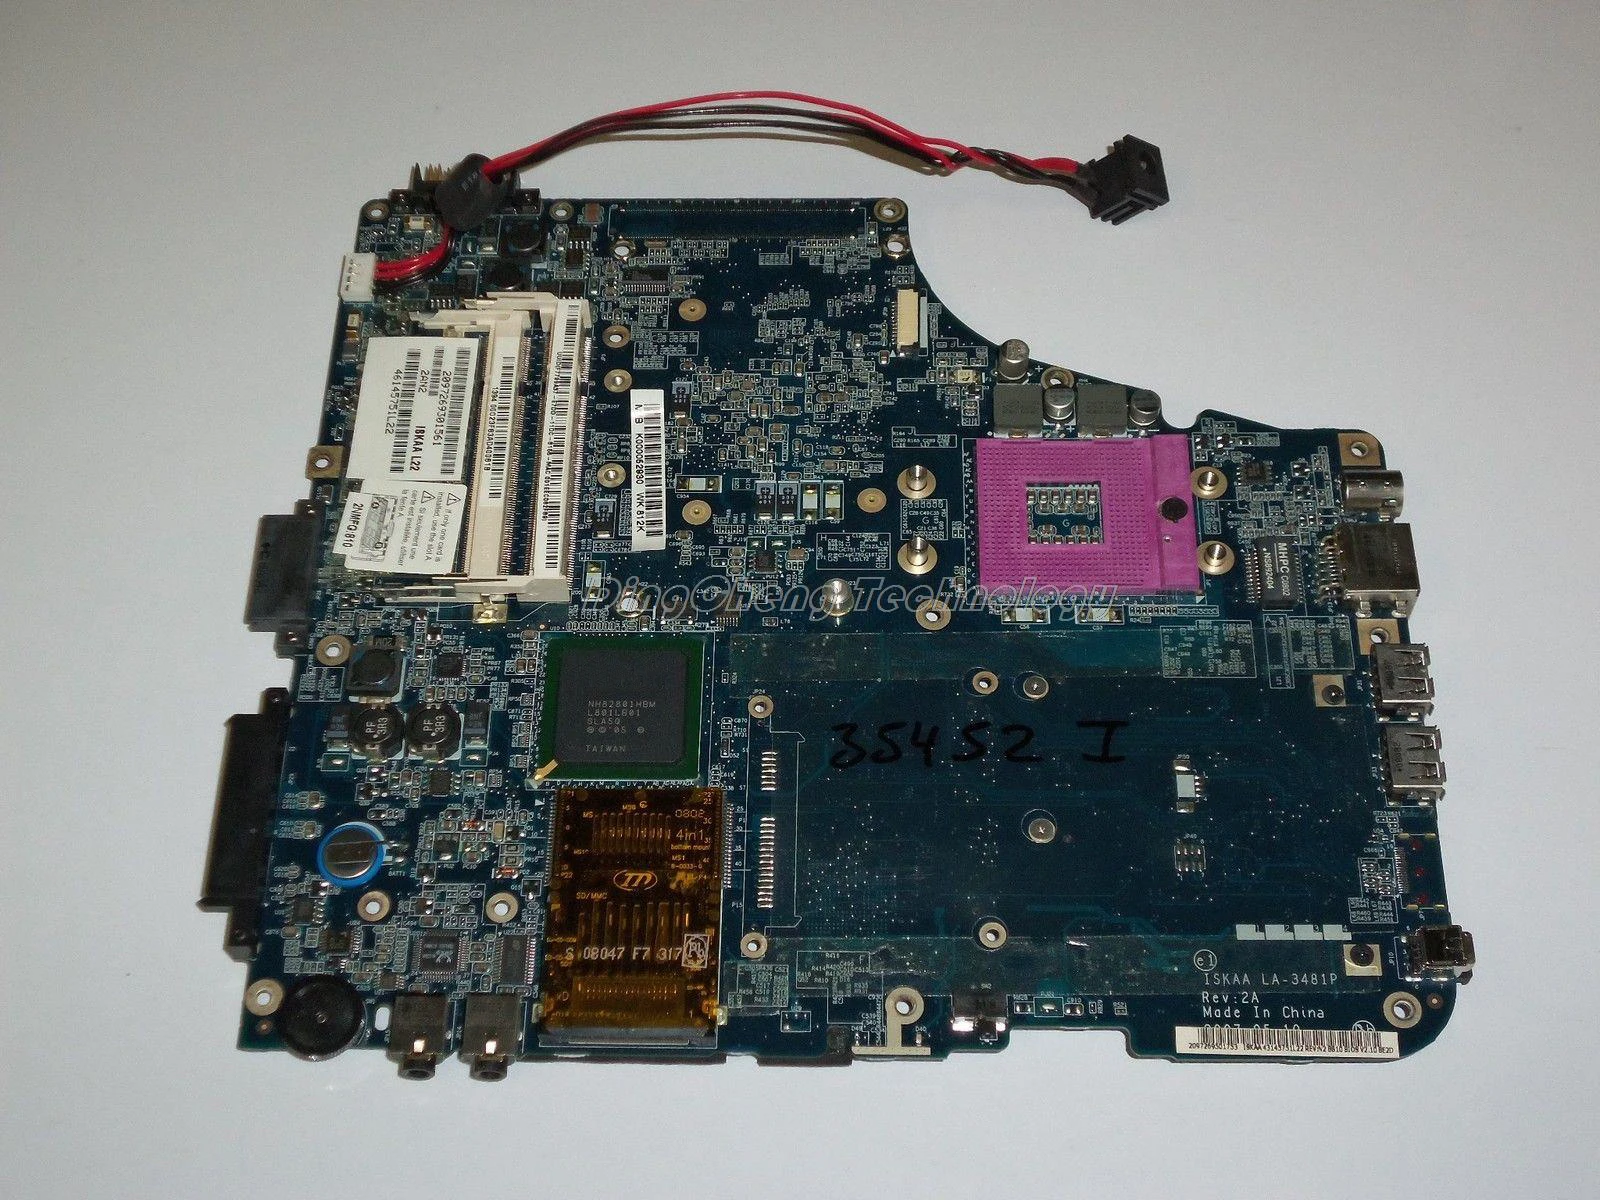 HOLYTIME материнская плата для ноутбука Toshiba Satellite A200 A205 K000052930 ISKAA LA-3481P GM965 DDR2 интегрированная видеокарта